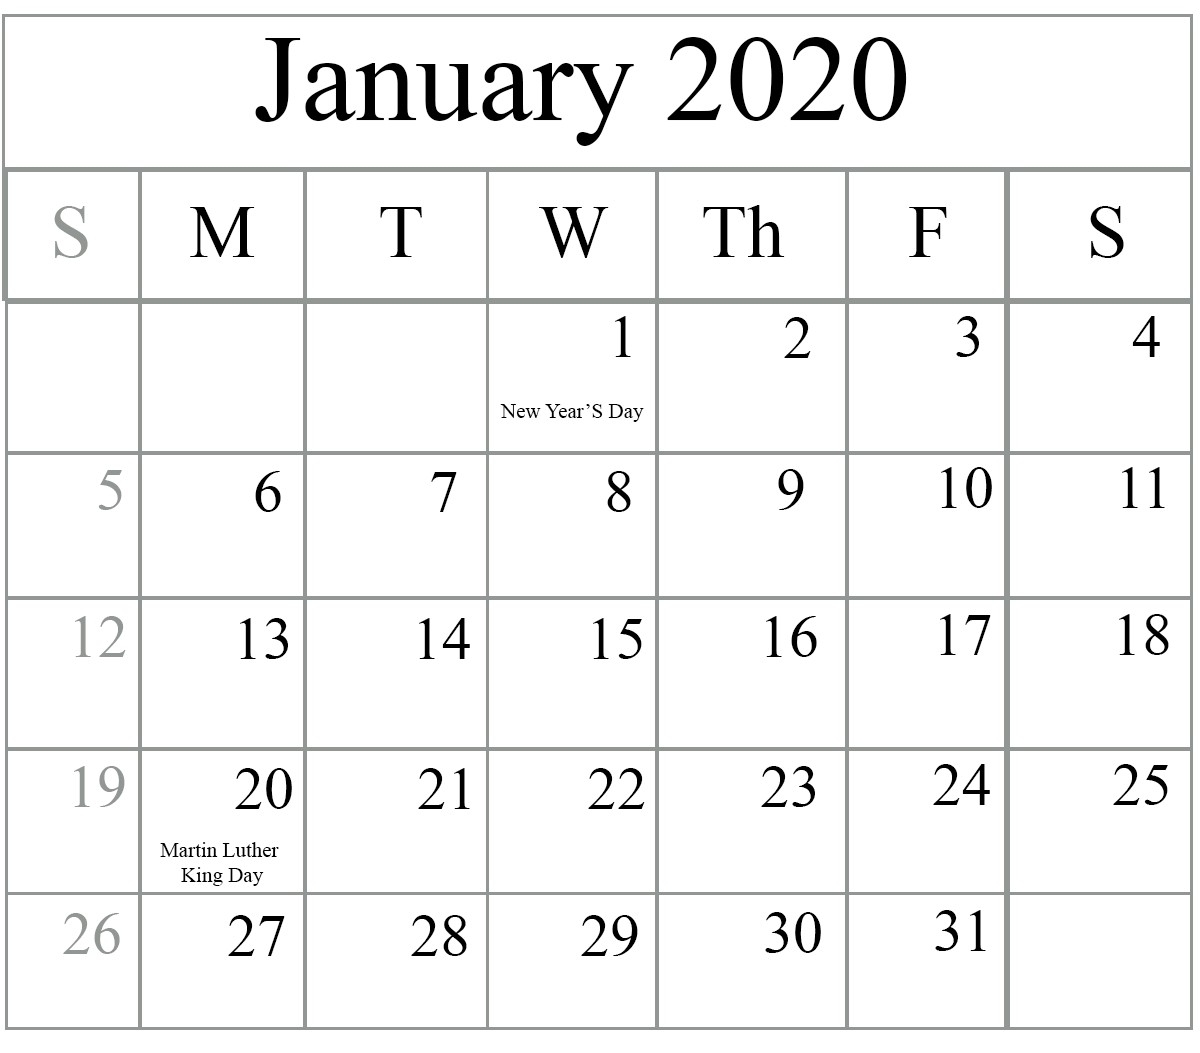 January 2020 Calendar Wallpapers - Wallpaper Cave-January 2020 Calendar Wallpaper